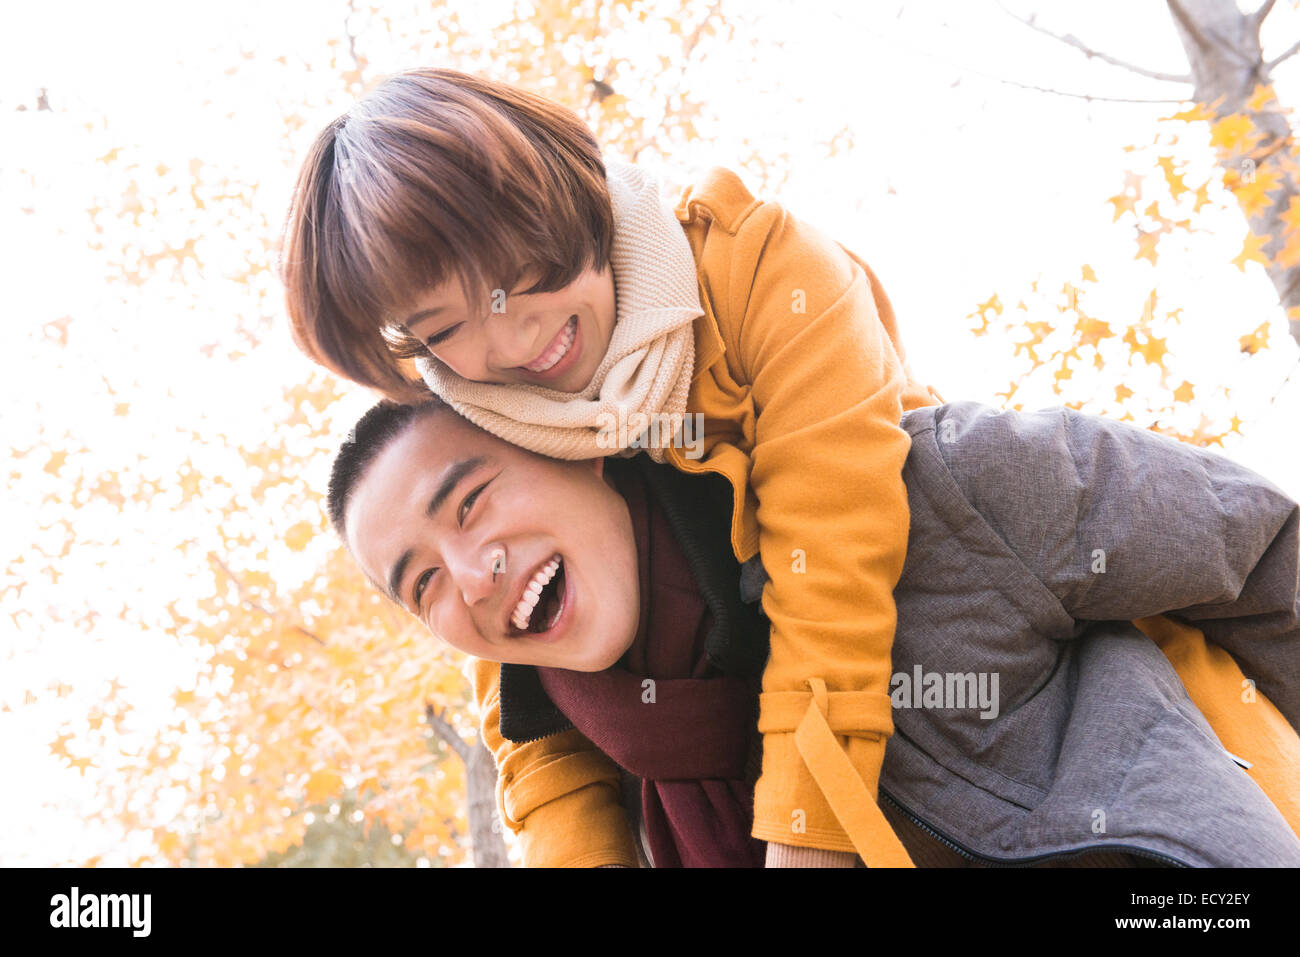 Young couple piggybacking outdoors Stock Photo